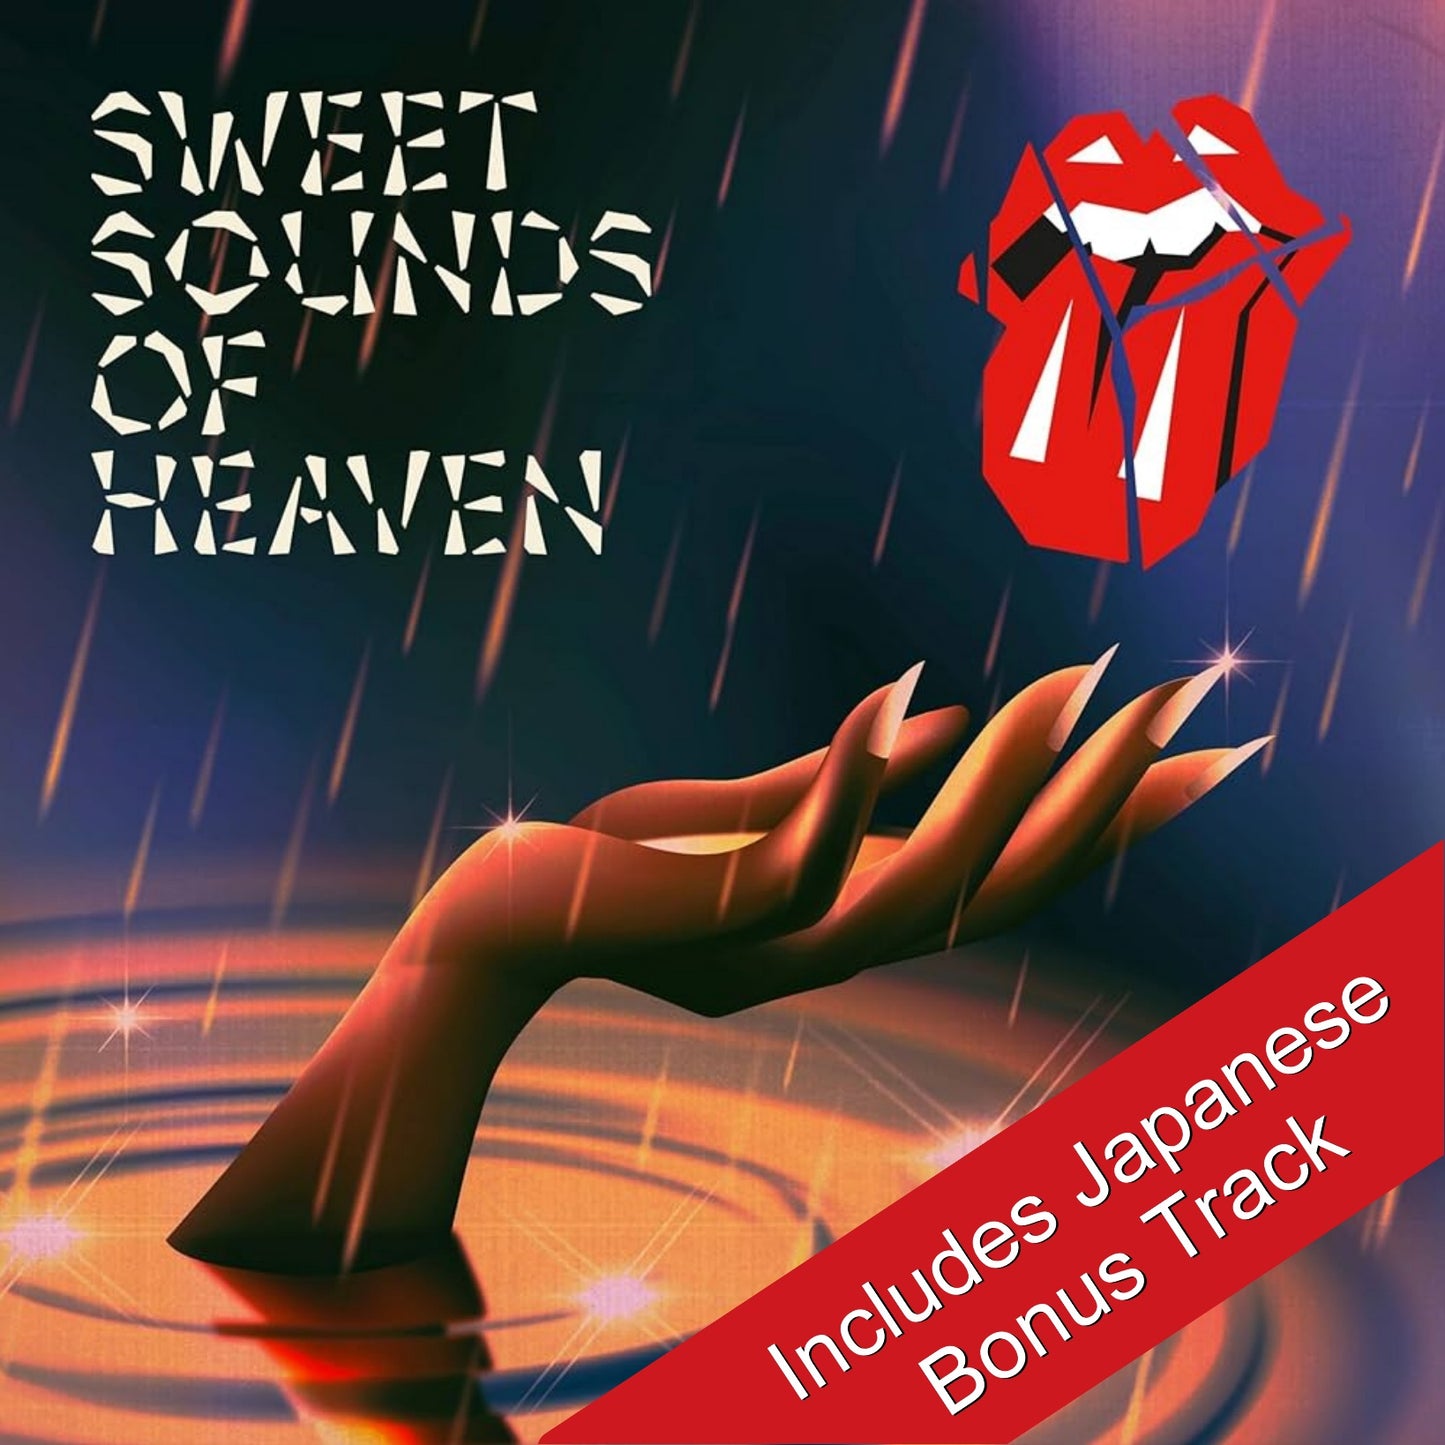 Rolling_Stones_Sweet_Sounds_of_Heaven_Japan_SHM-CD_Single_Bonus_Track